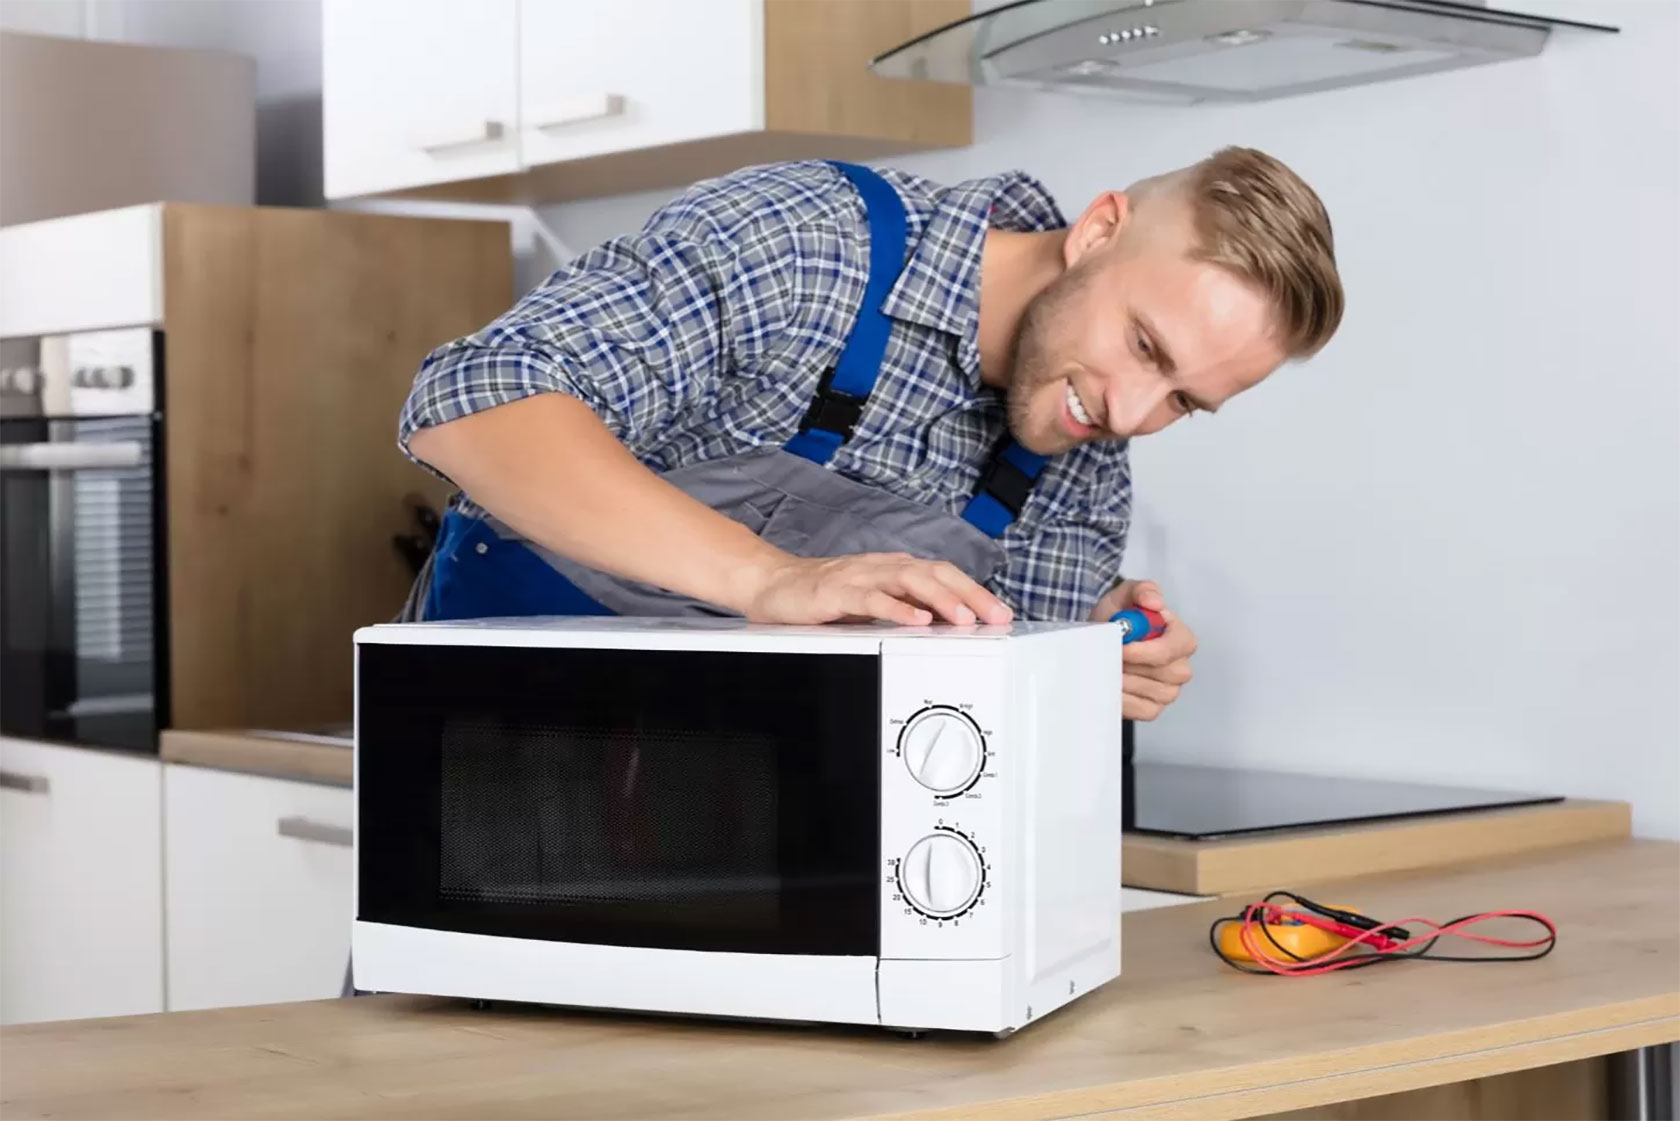 Microwave Repair